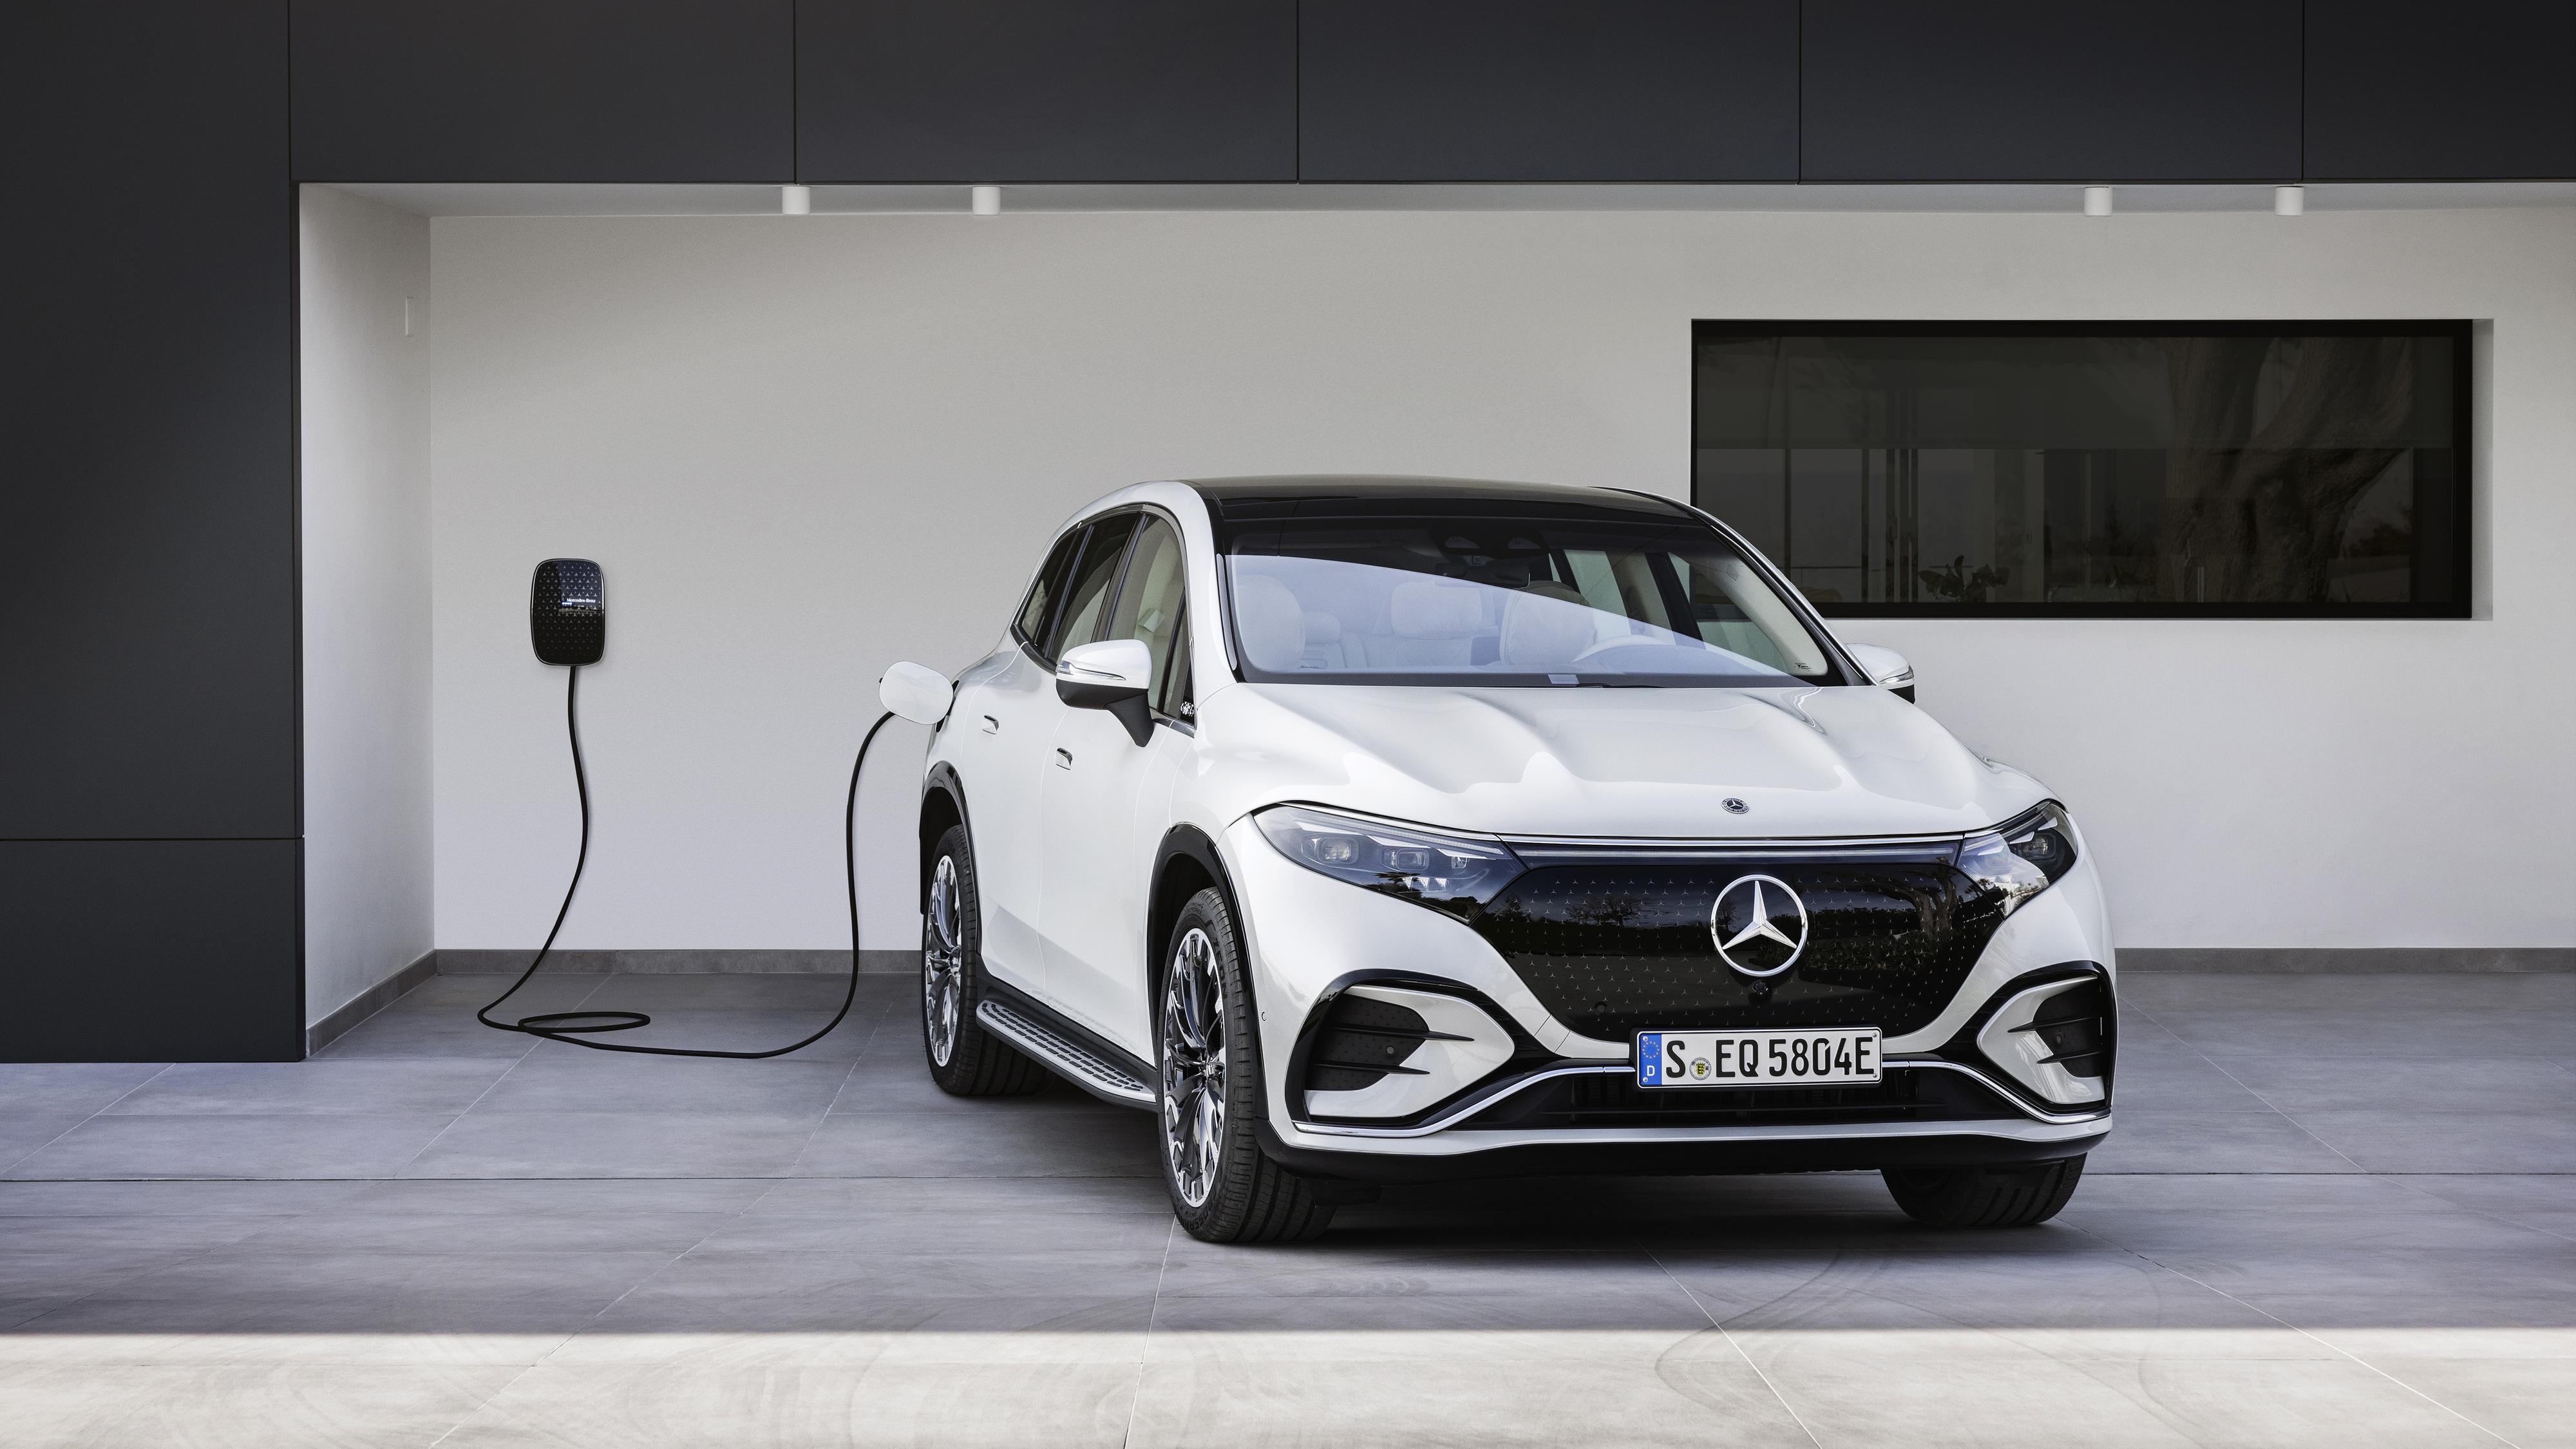 Den nye luksus-elbilen fra Mercedes-Benz har fått pris